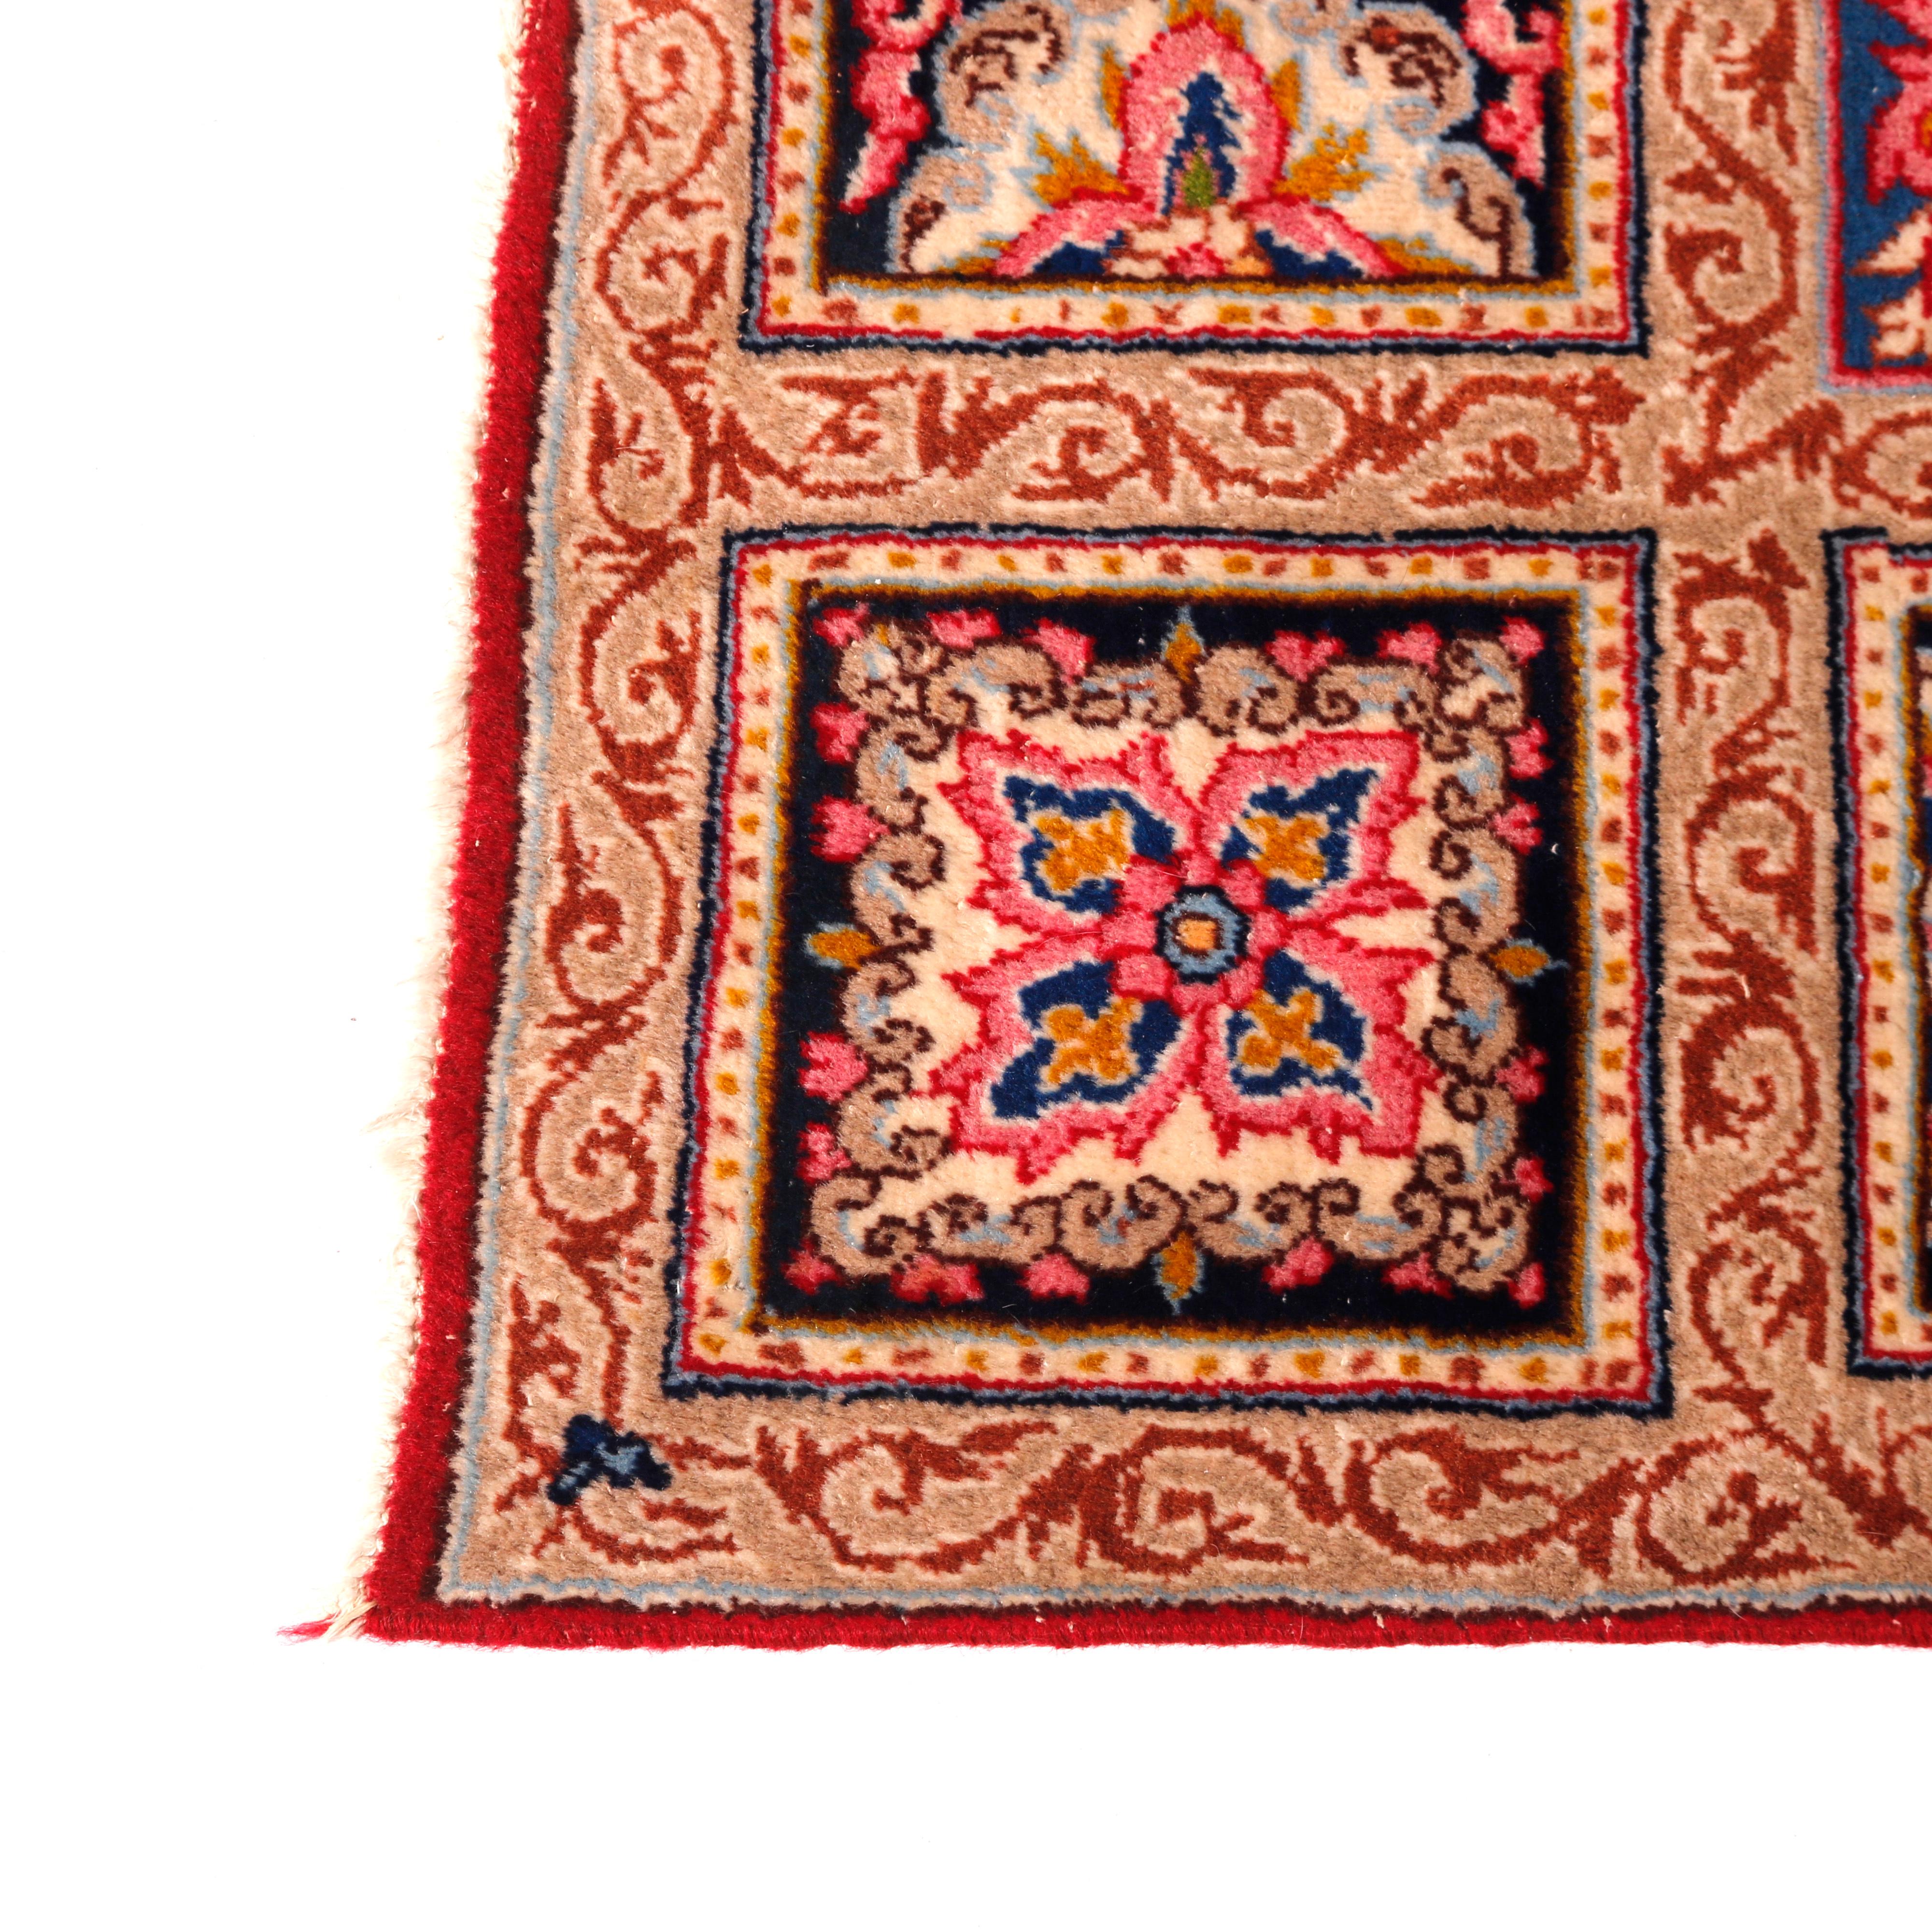 Antique Bakhtiari Oriental Wool Rug Approximately 7' X 10', circa 1930

Measures - 114.5